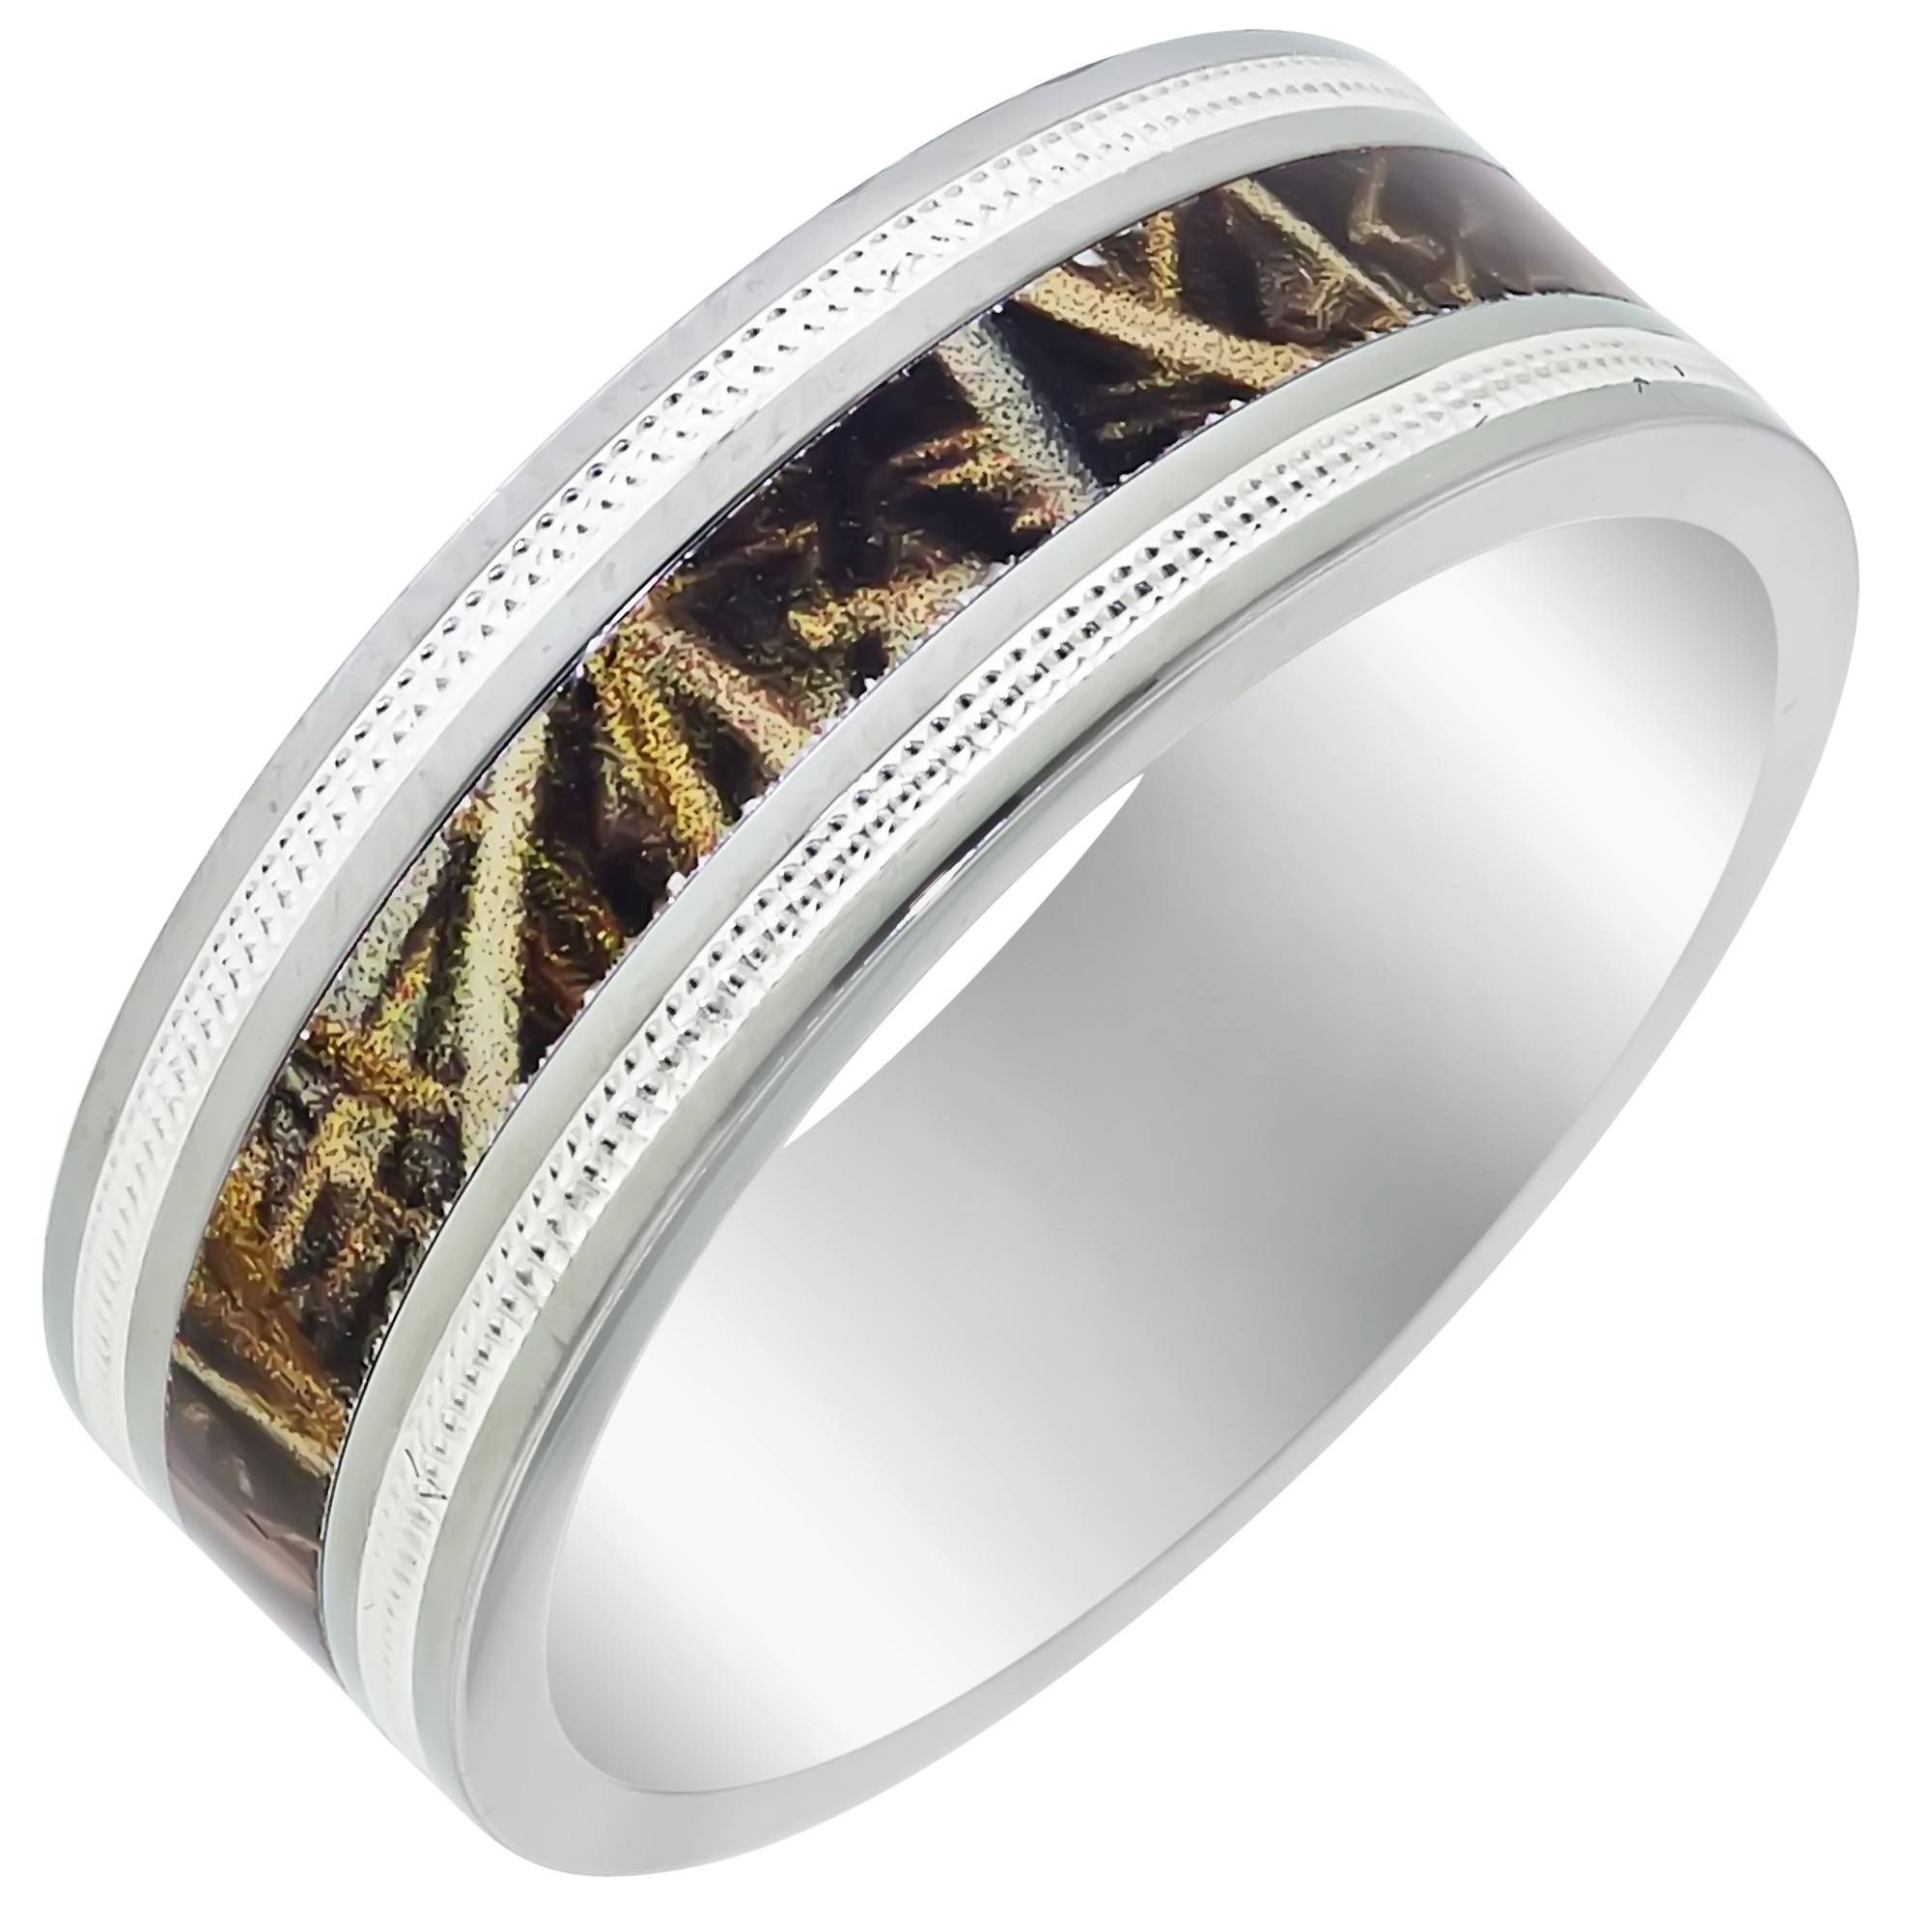 Camo Diamond Wedding Rings
 15 Best Ideas of Camo Wedding Rings With Diamonds